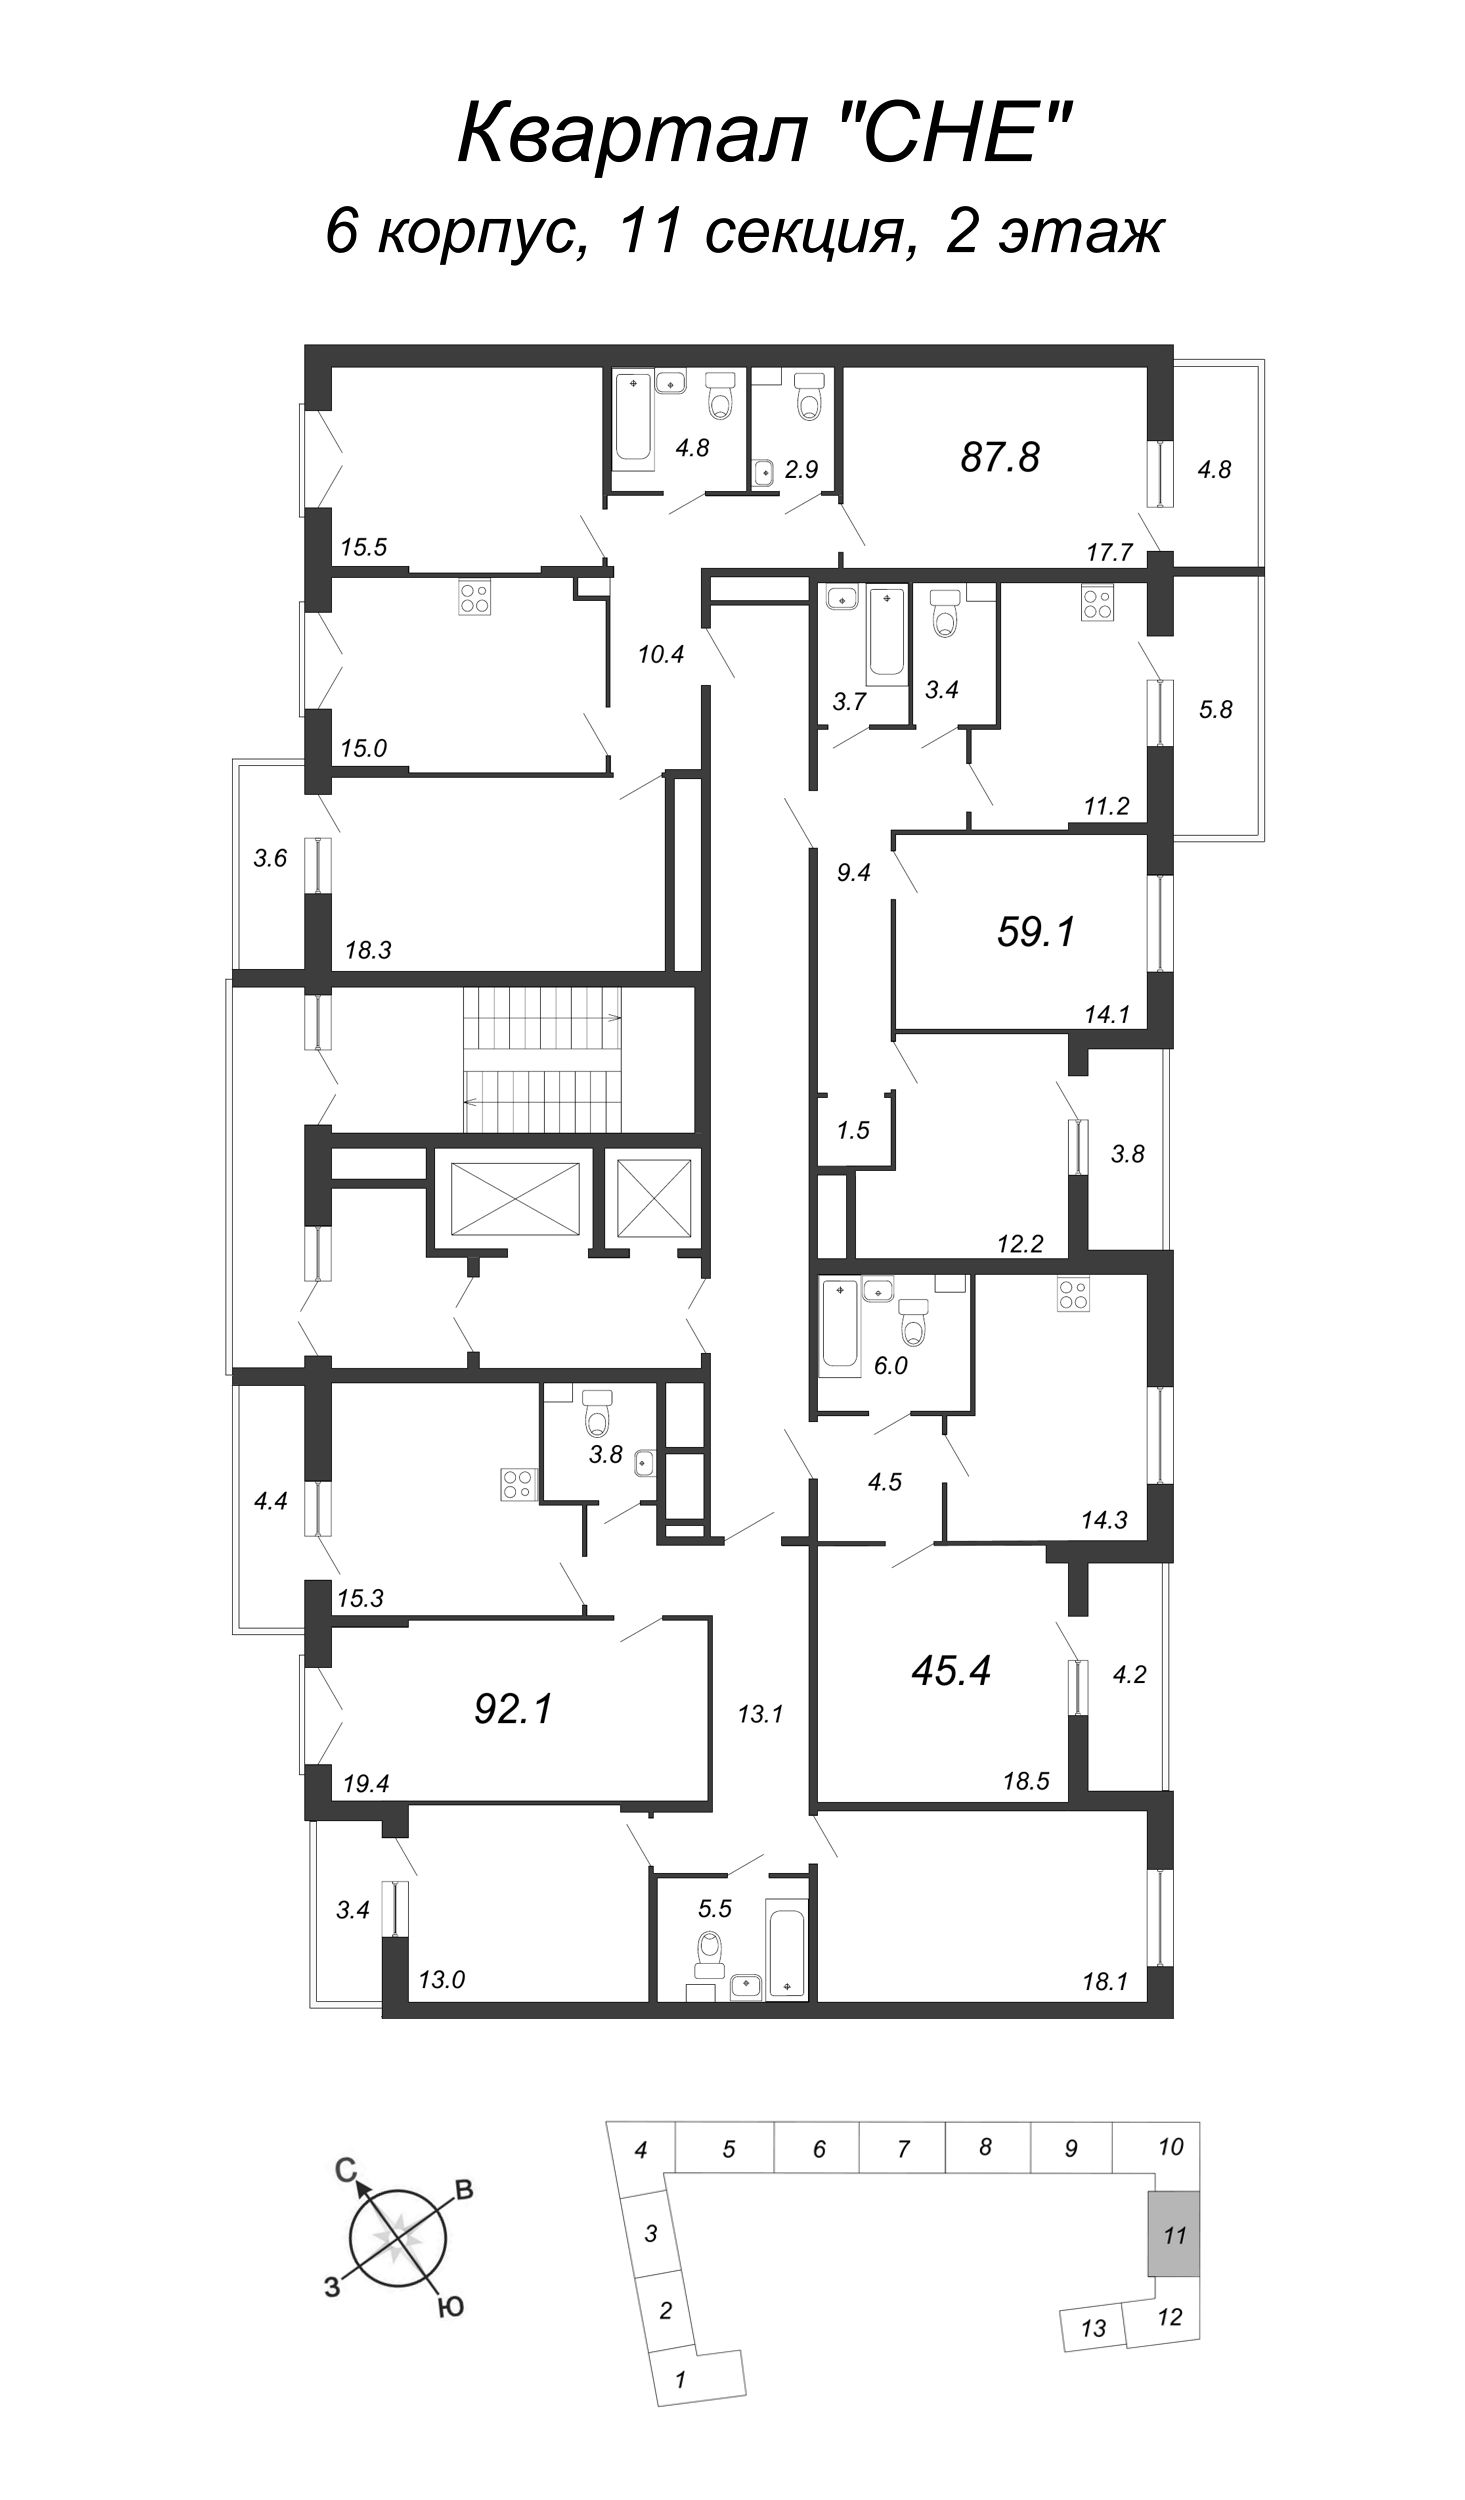 3-комнатная квартира, 89.9 м² в ЖК "Квартал Che" - планировка этажа